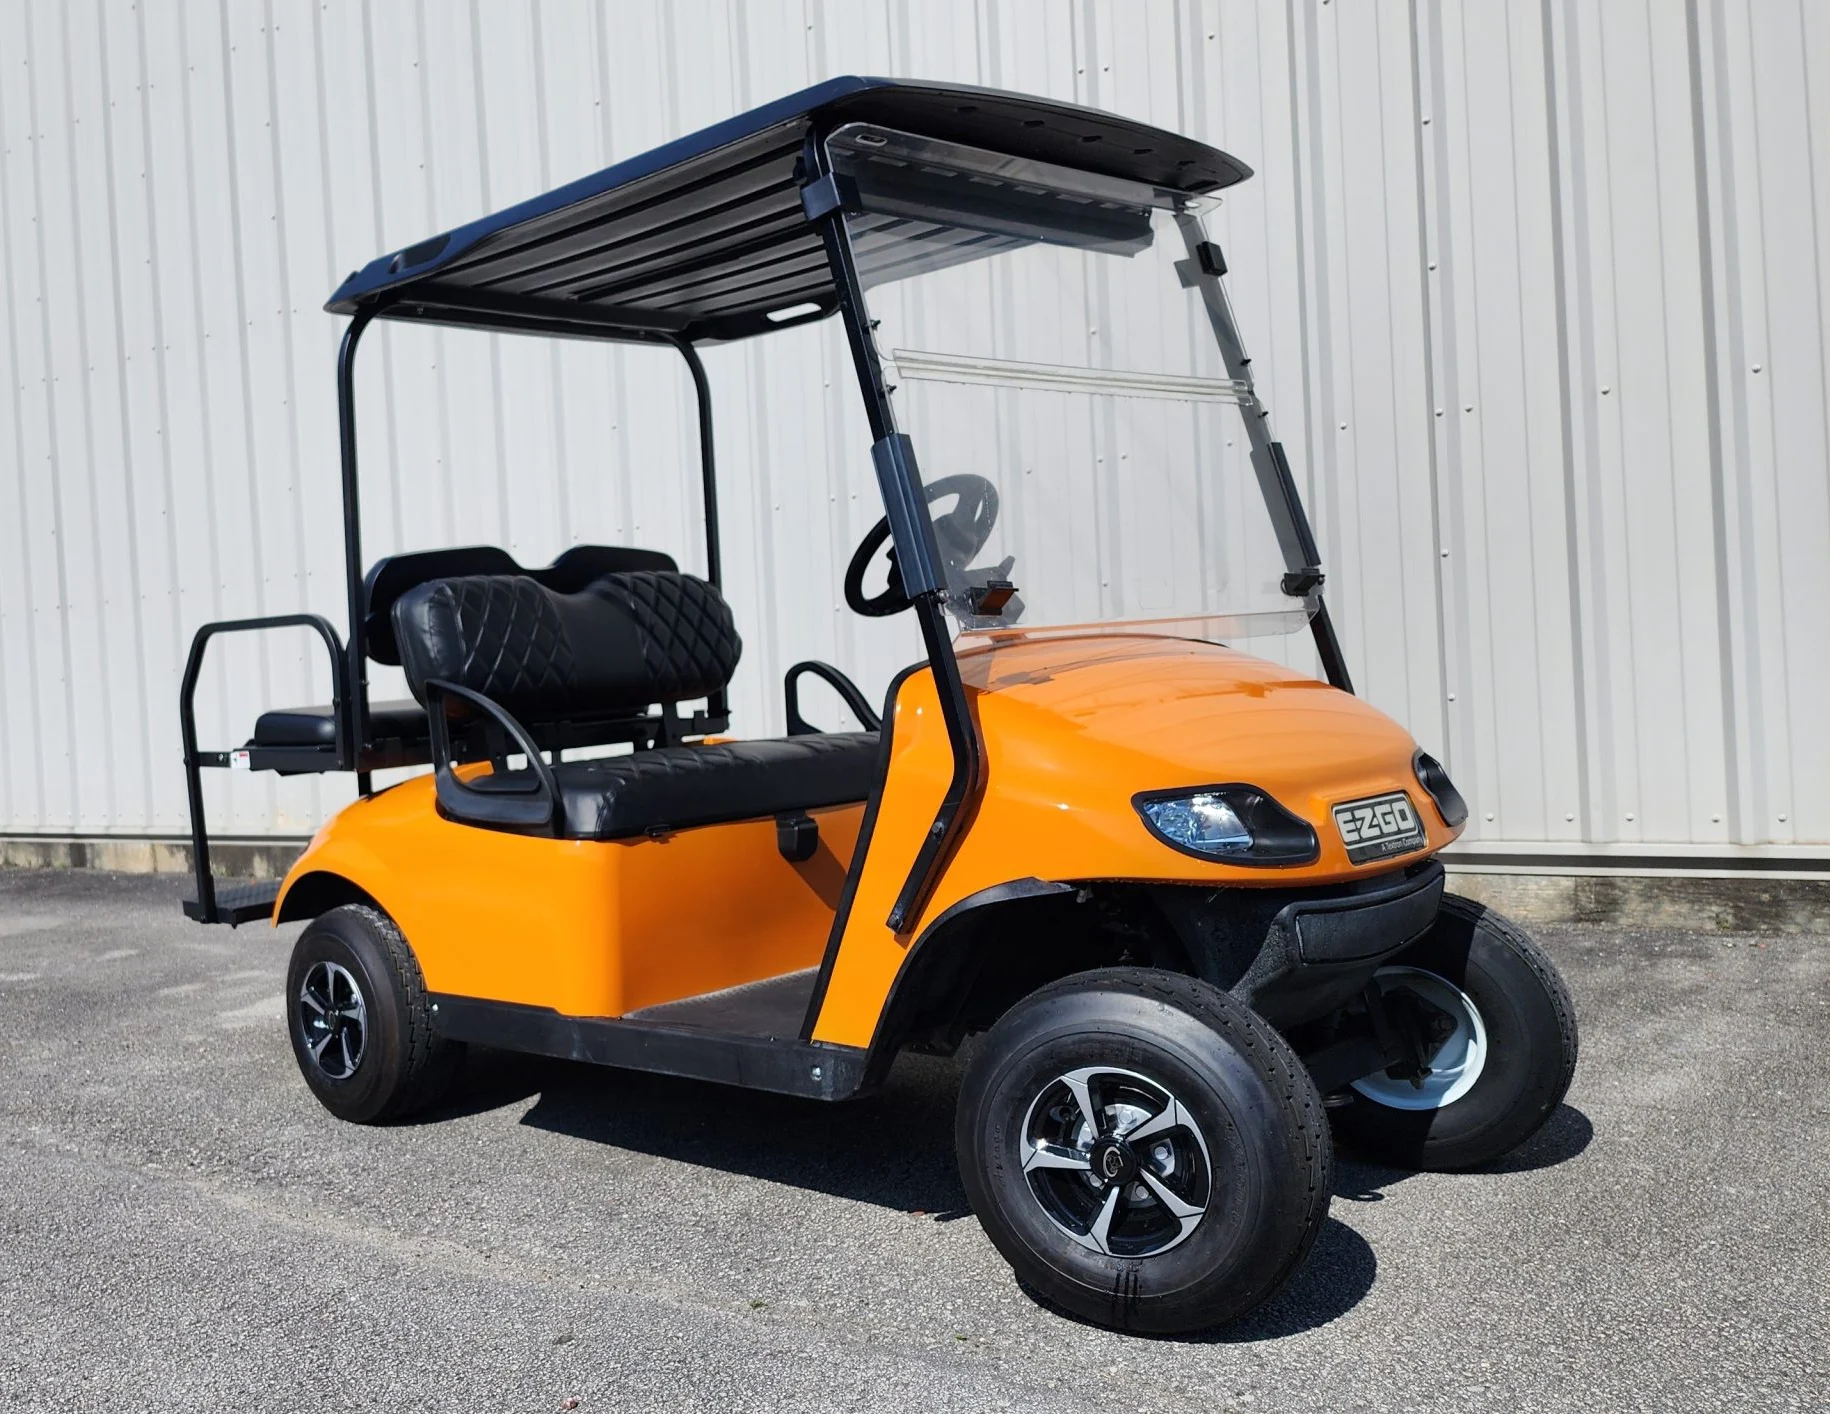 EZGO Golf Cart in Vibrant Orange